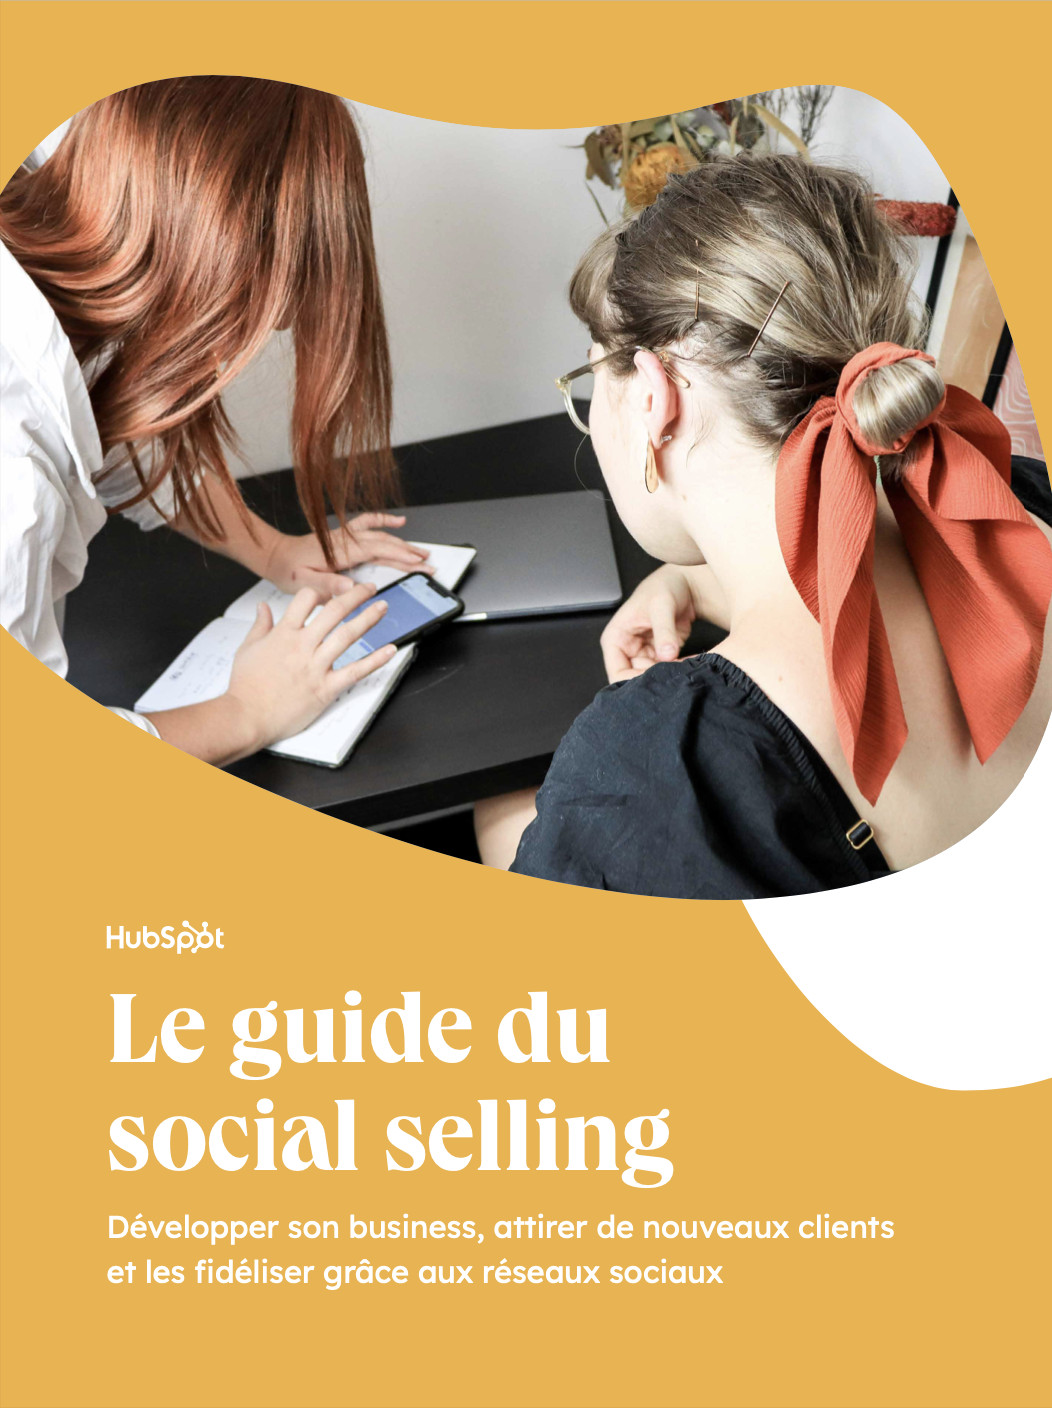 Le guide du social selling